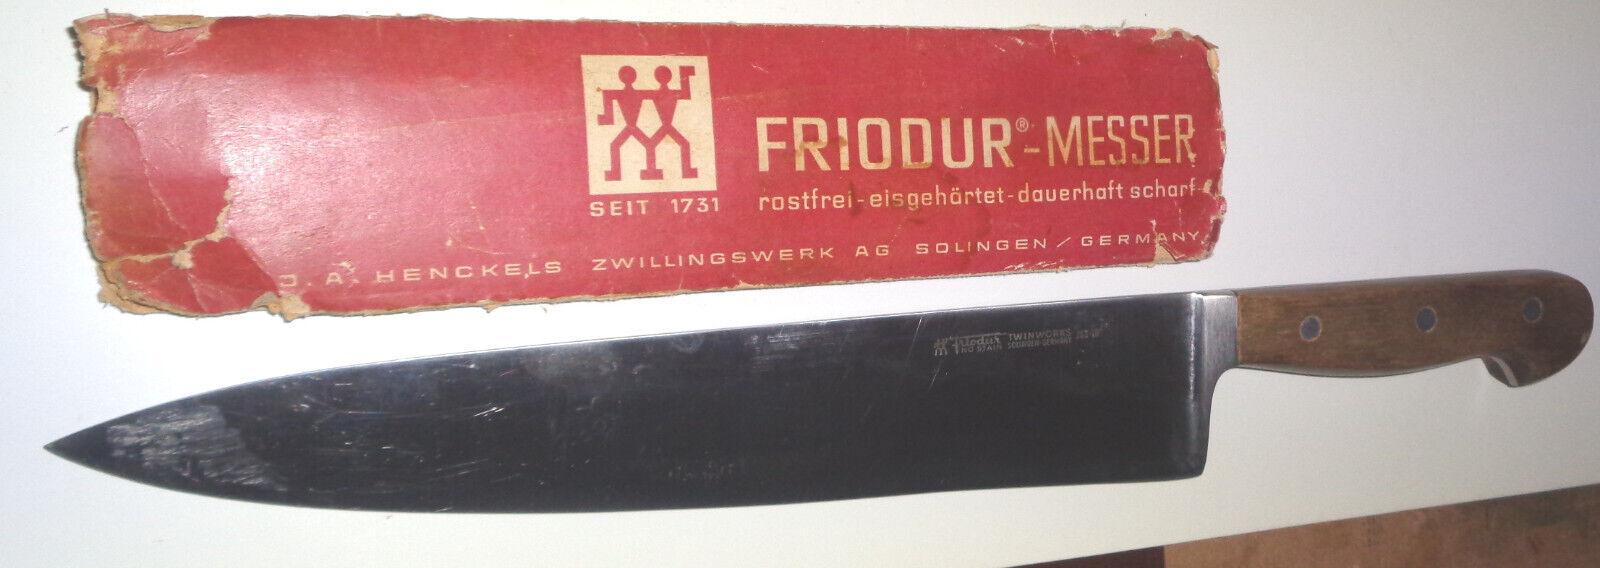 Vintage Solingen Cutlery Henckels Friodur Messer Zwilling Twin Works Chefs Knife